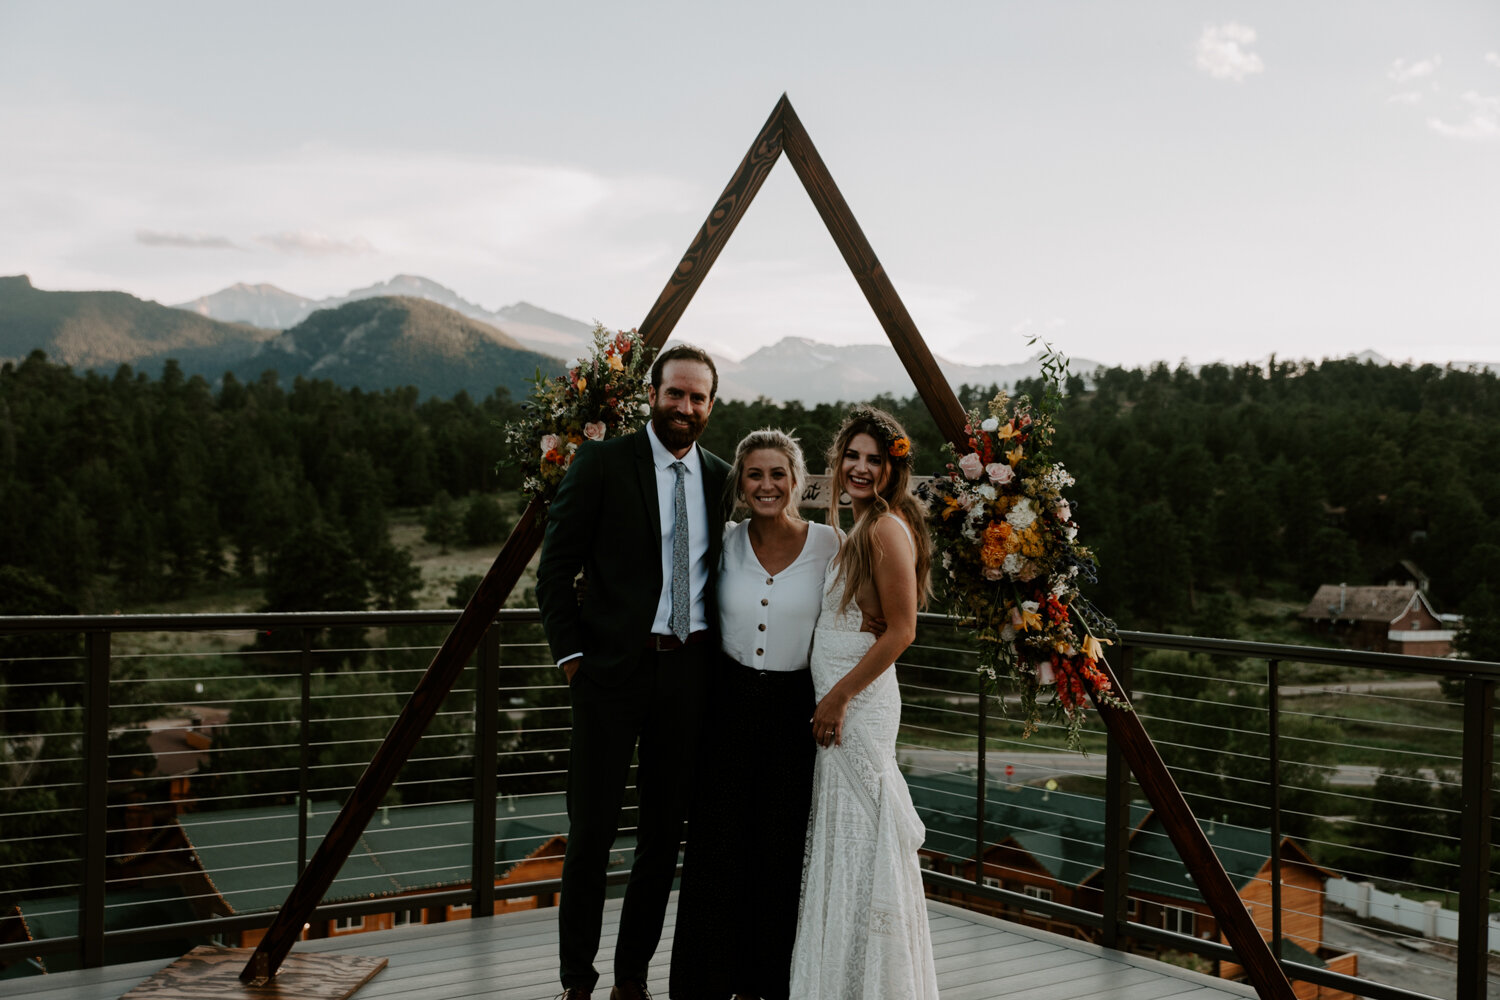 Hester+Buck+Estes+Park+Rocky+Mountain+National+Park+Trail+Ridge+Road+Colorado+Wedding+Photographer-116.jpg